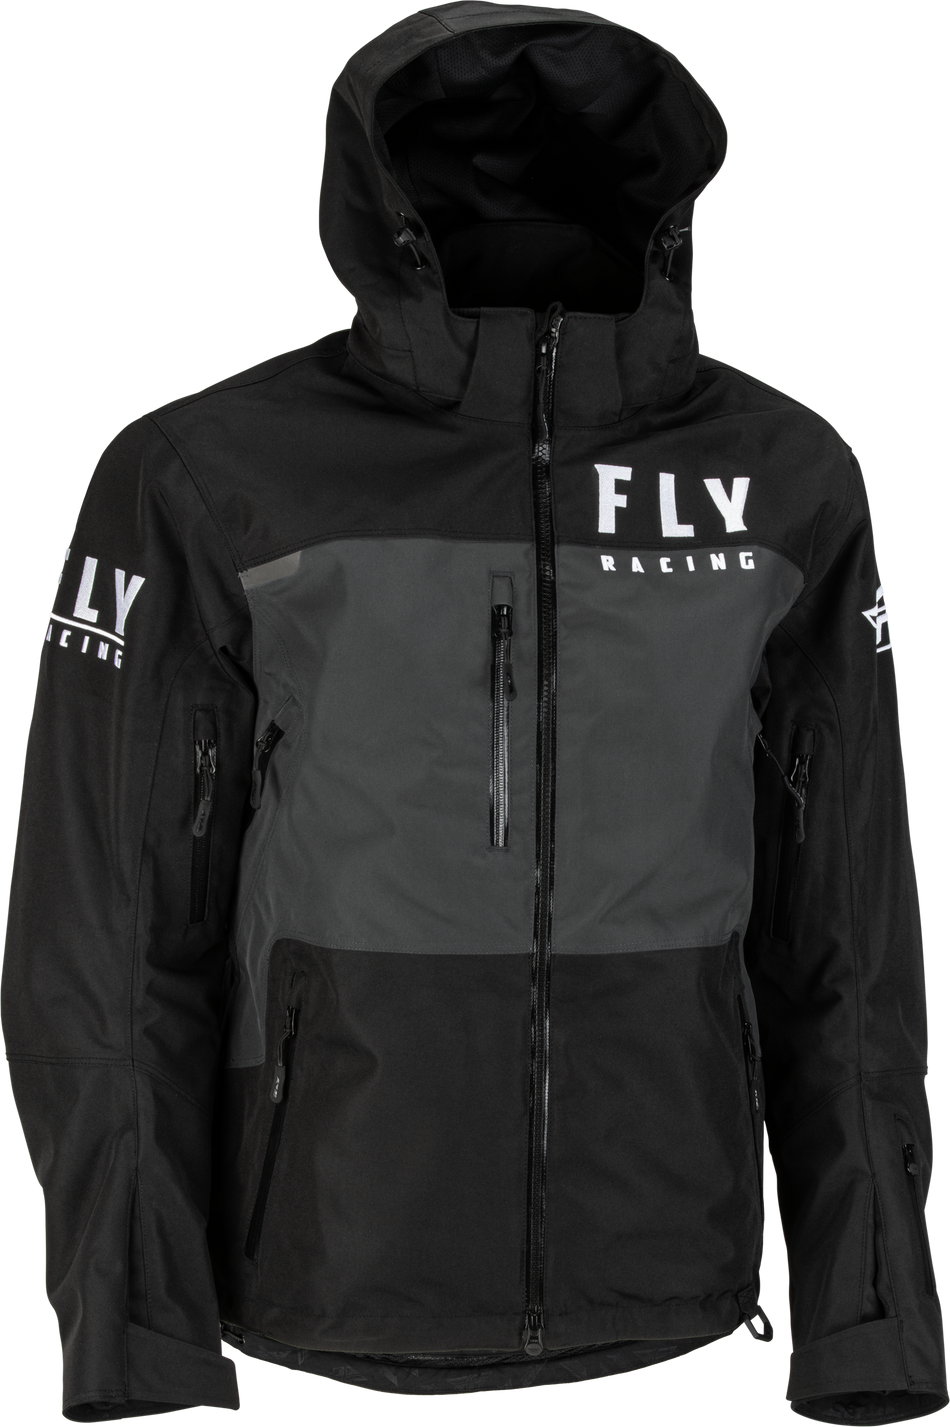 FLY RACING Carbon Jacket Black/Grey Xl 470-4133X